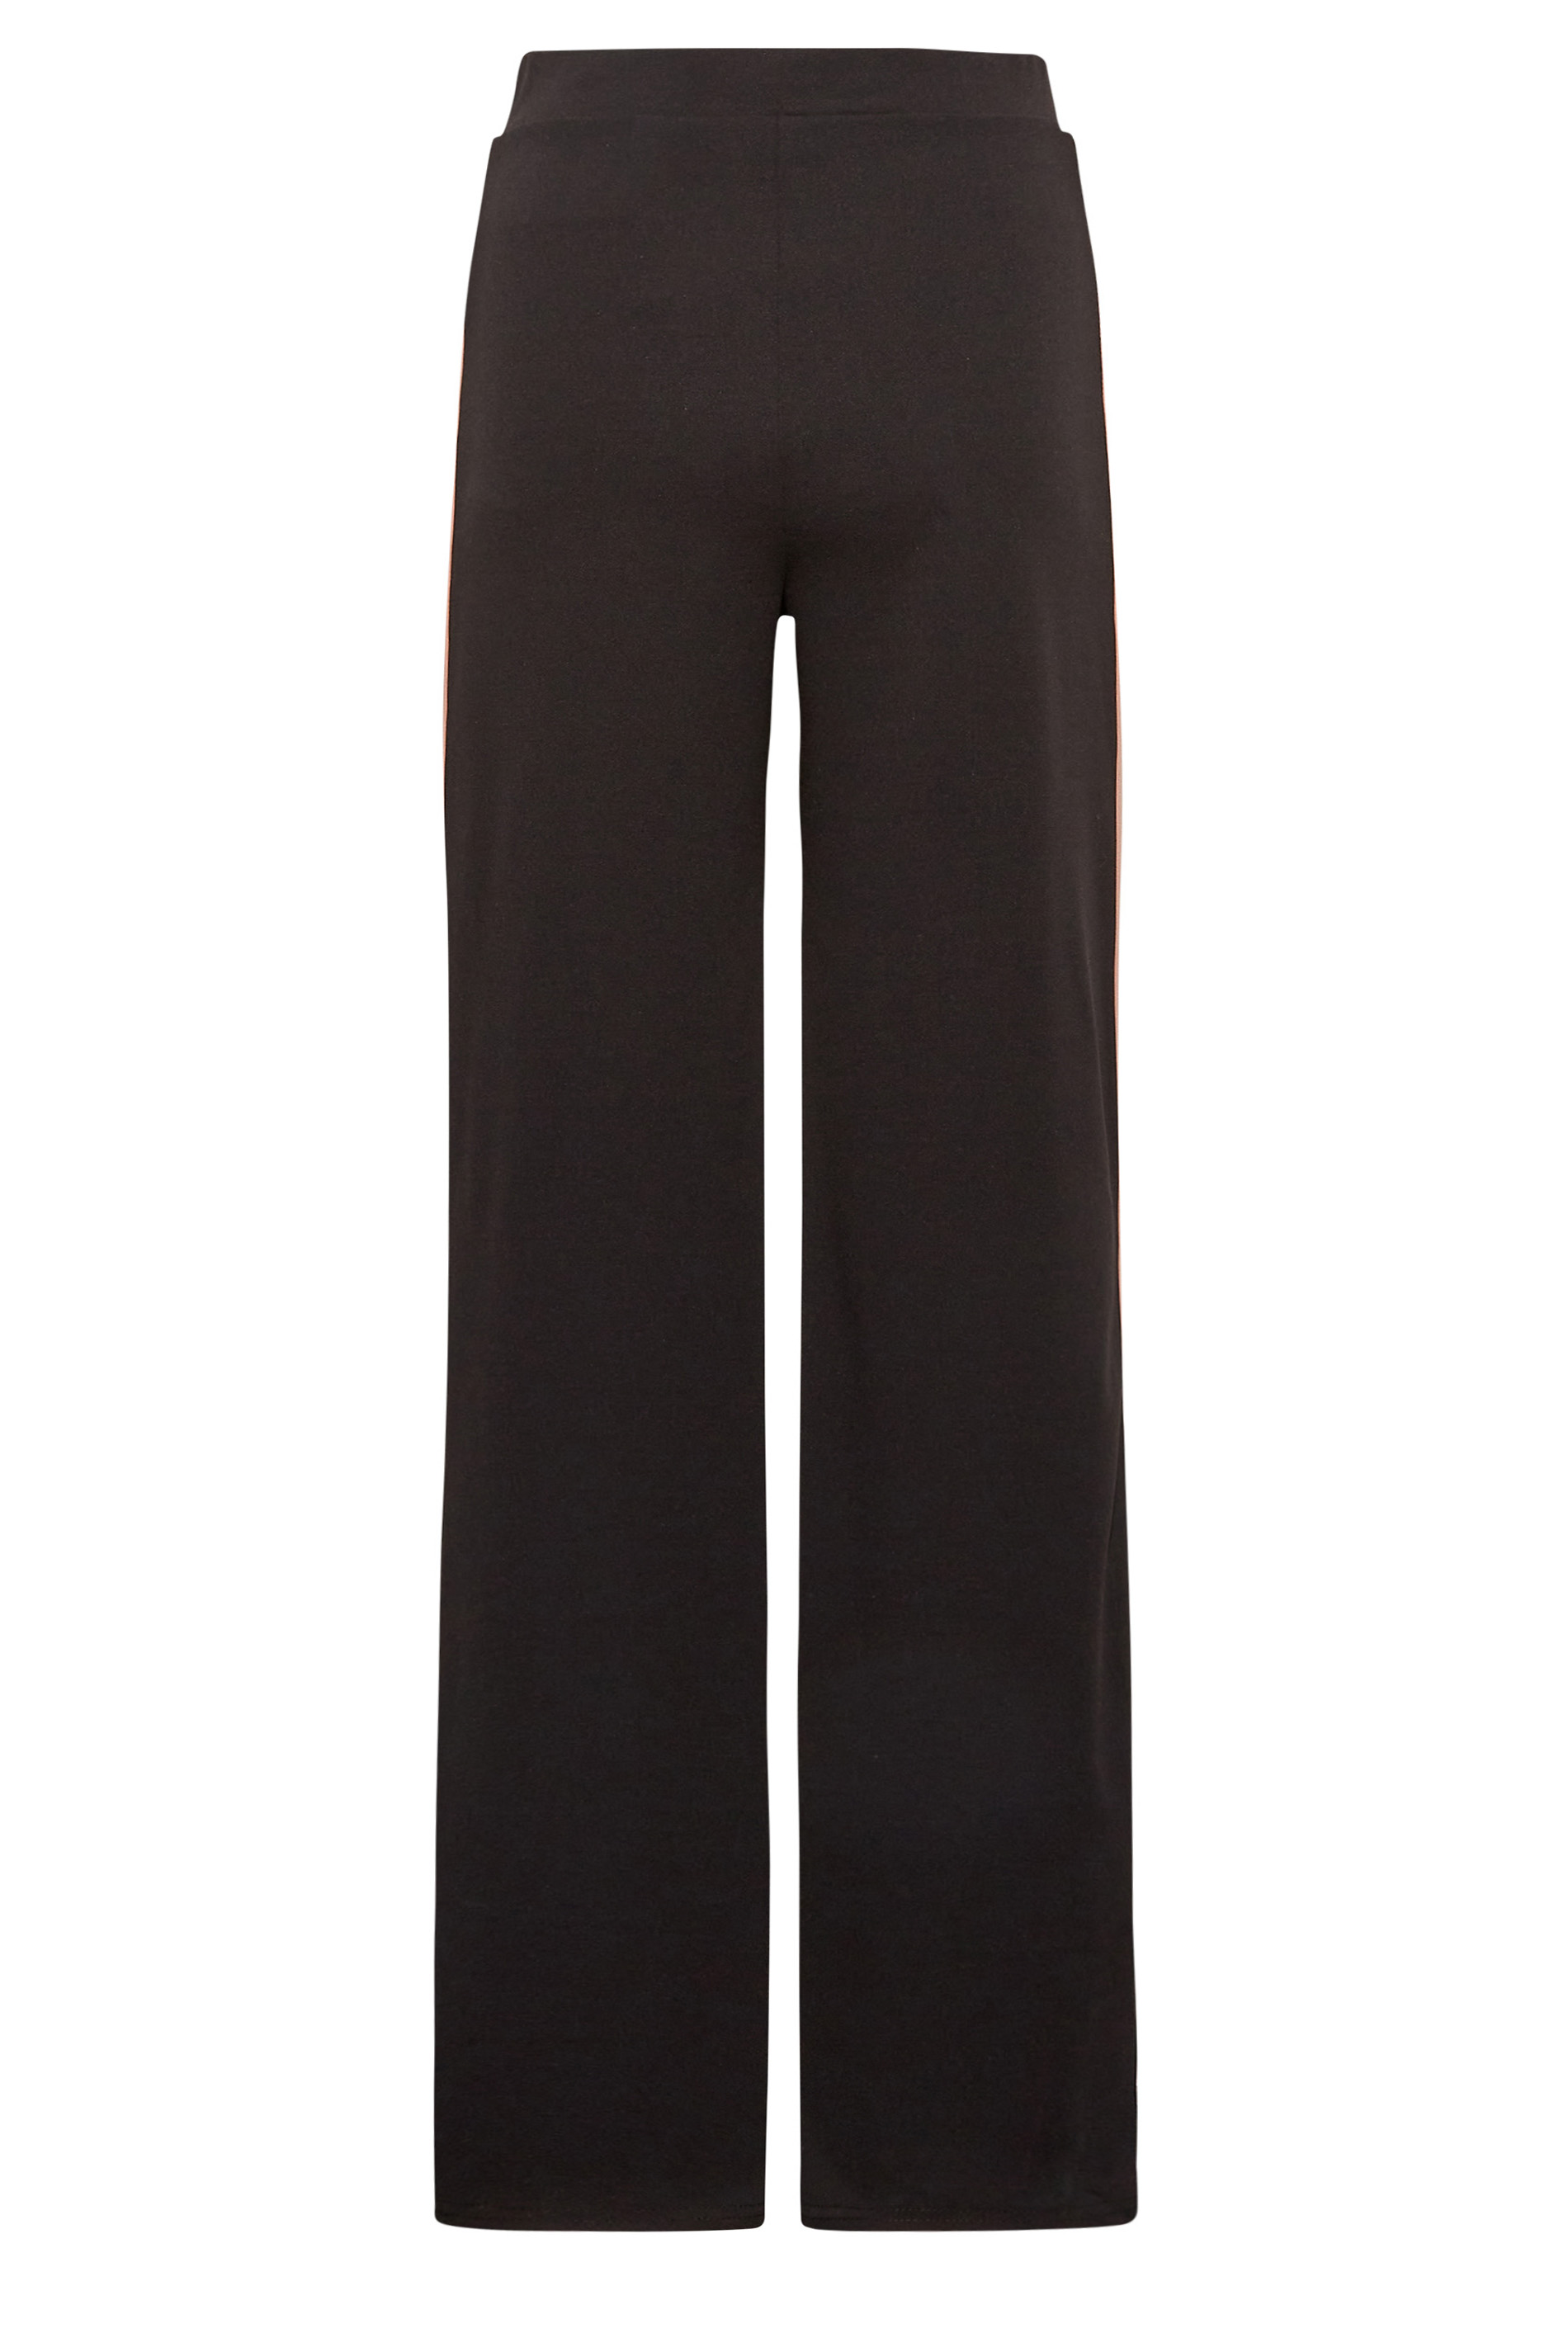 LTS Tall Women's Black & Pink Side Stripe Wide Leg Trousers | Long Tall Sally 2